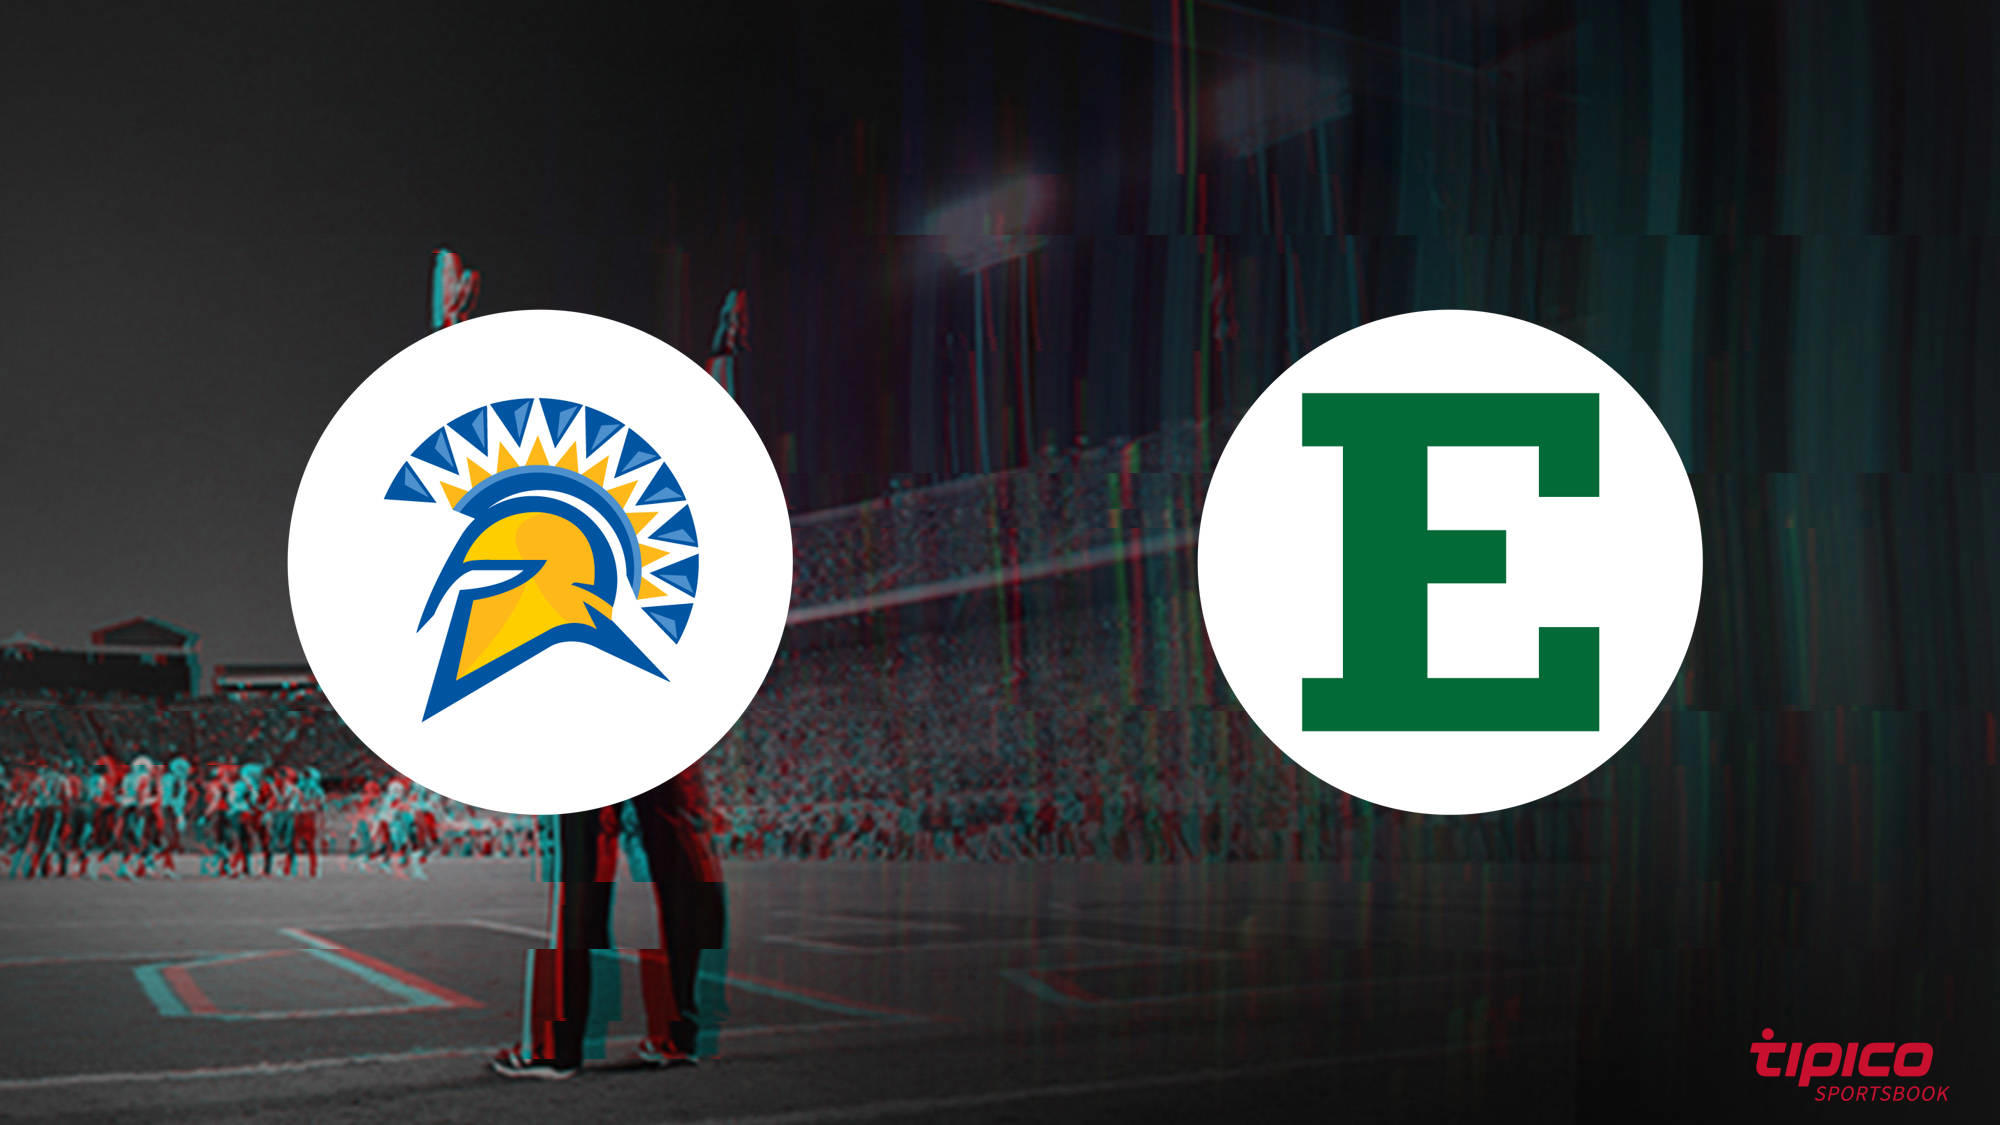 San Jose State Spartans vs. Eastern Michigan Eagles Preview